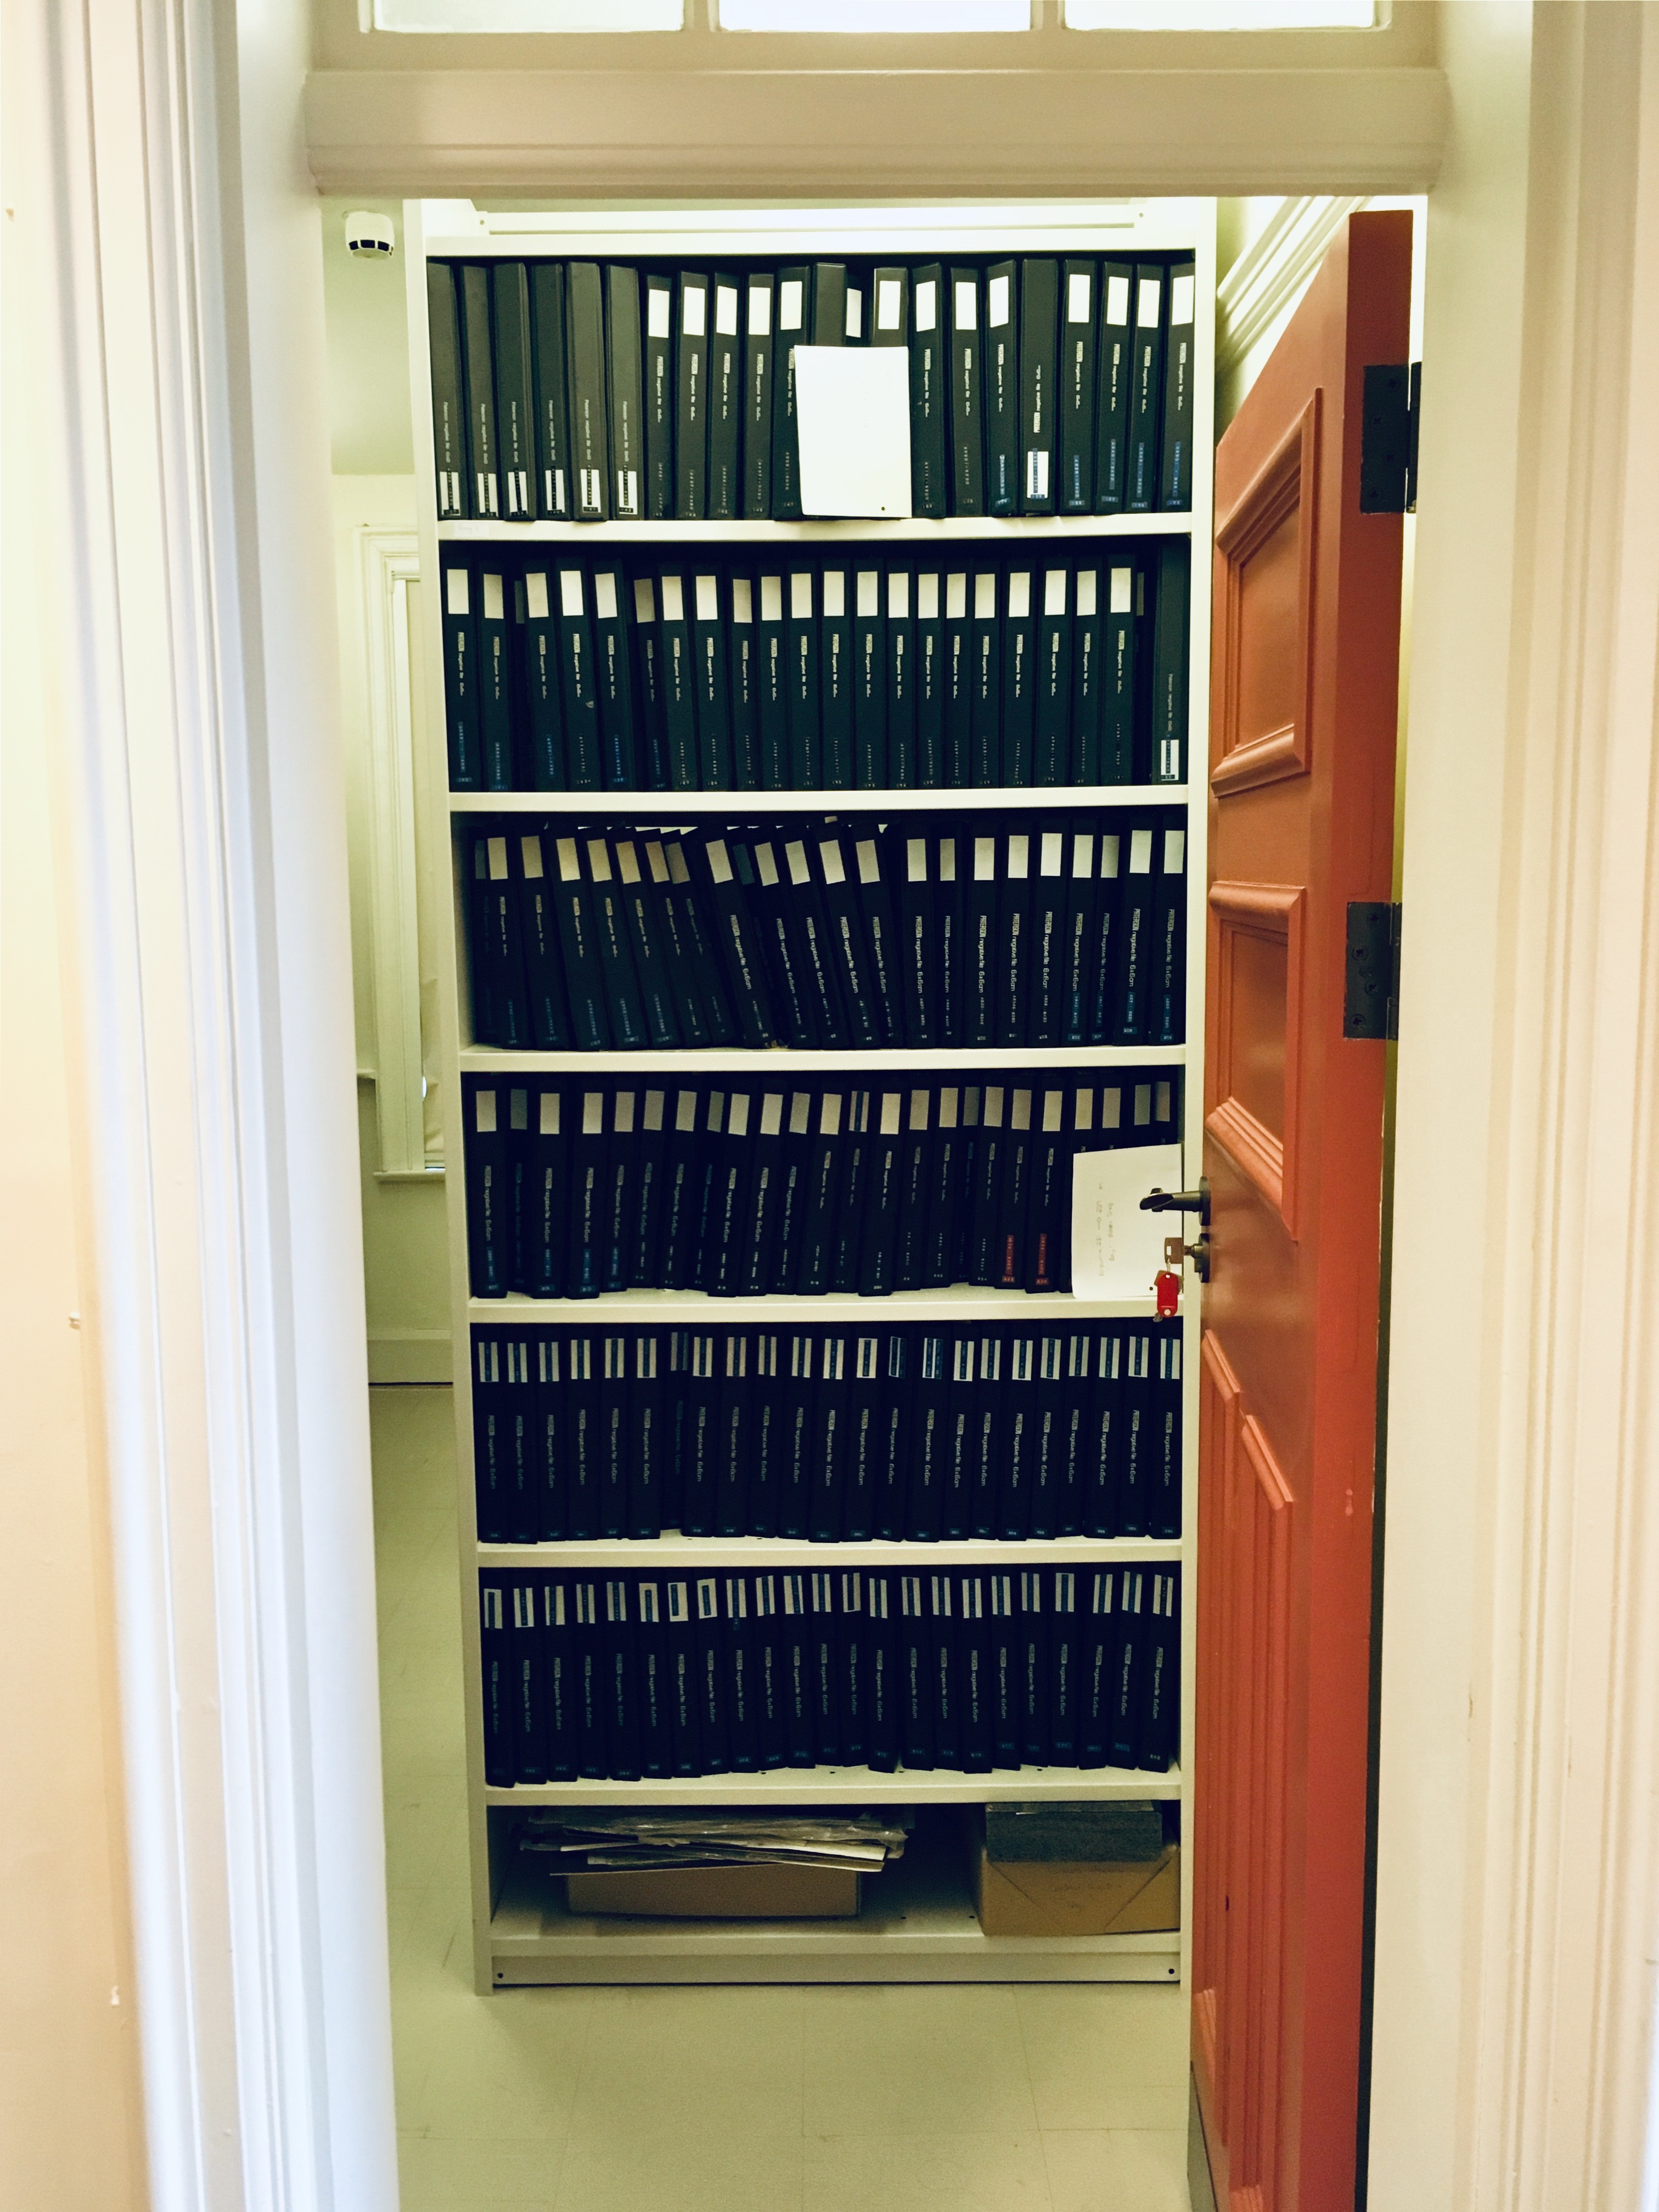 Image of an open doorway looking onto a shelf full of ring-binders.